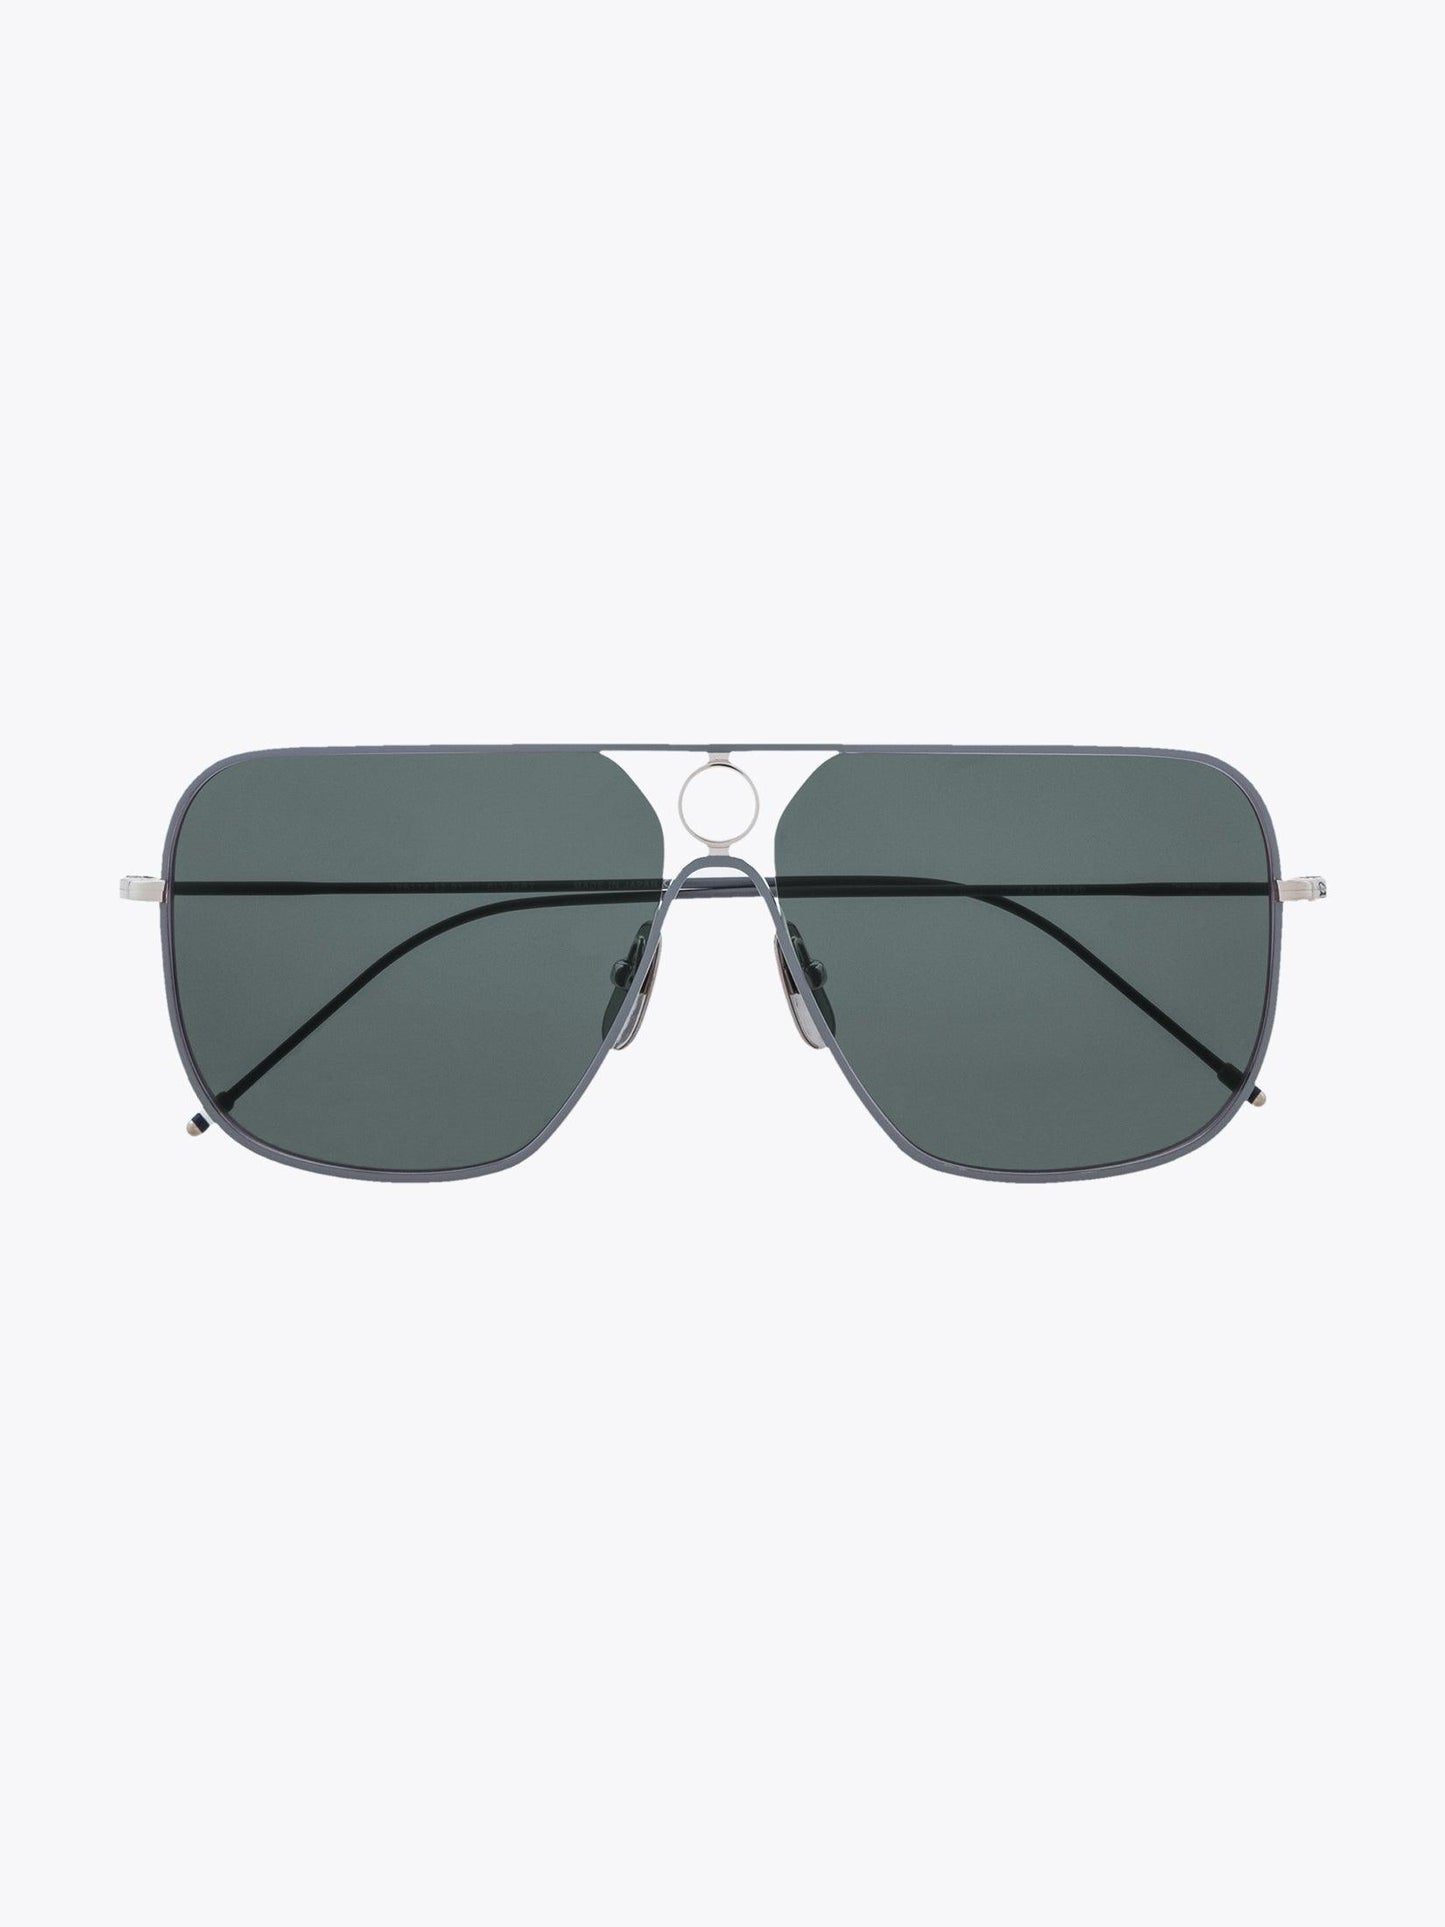 Thom Browne TB-114 Silver Sunglasses - Apodep.com